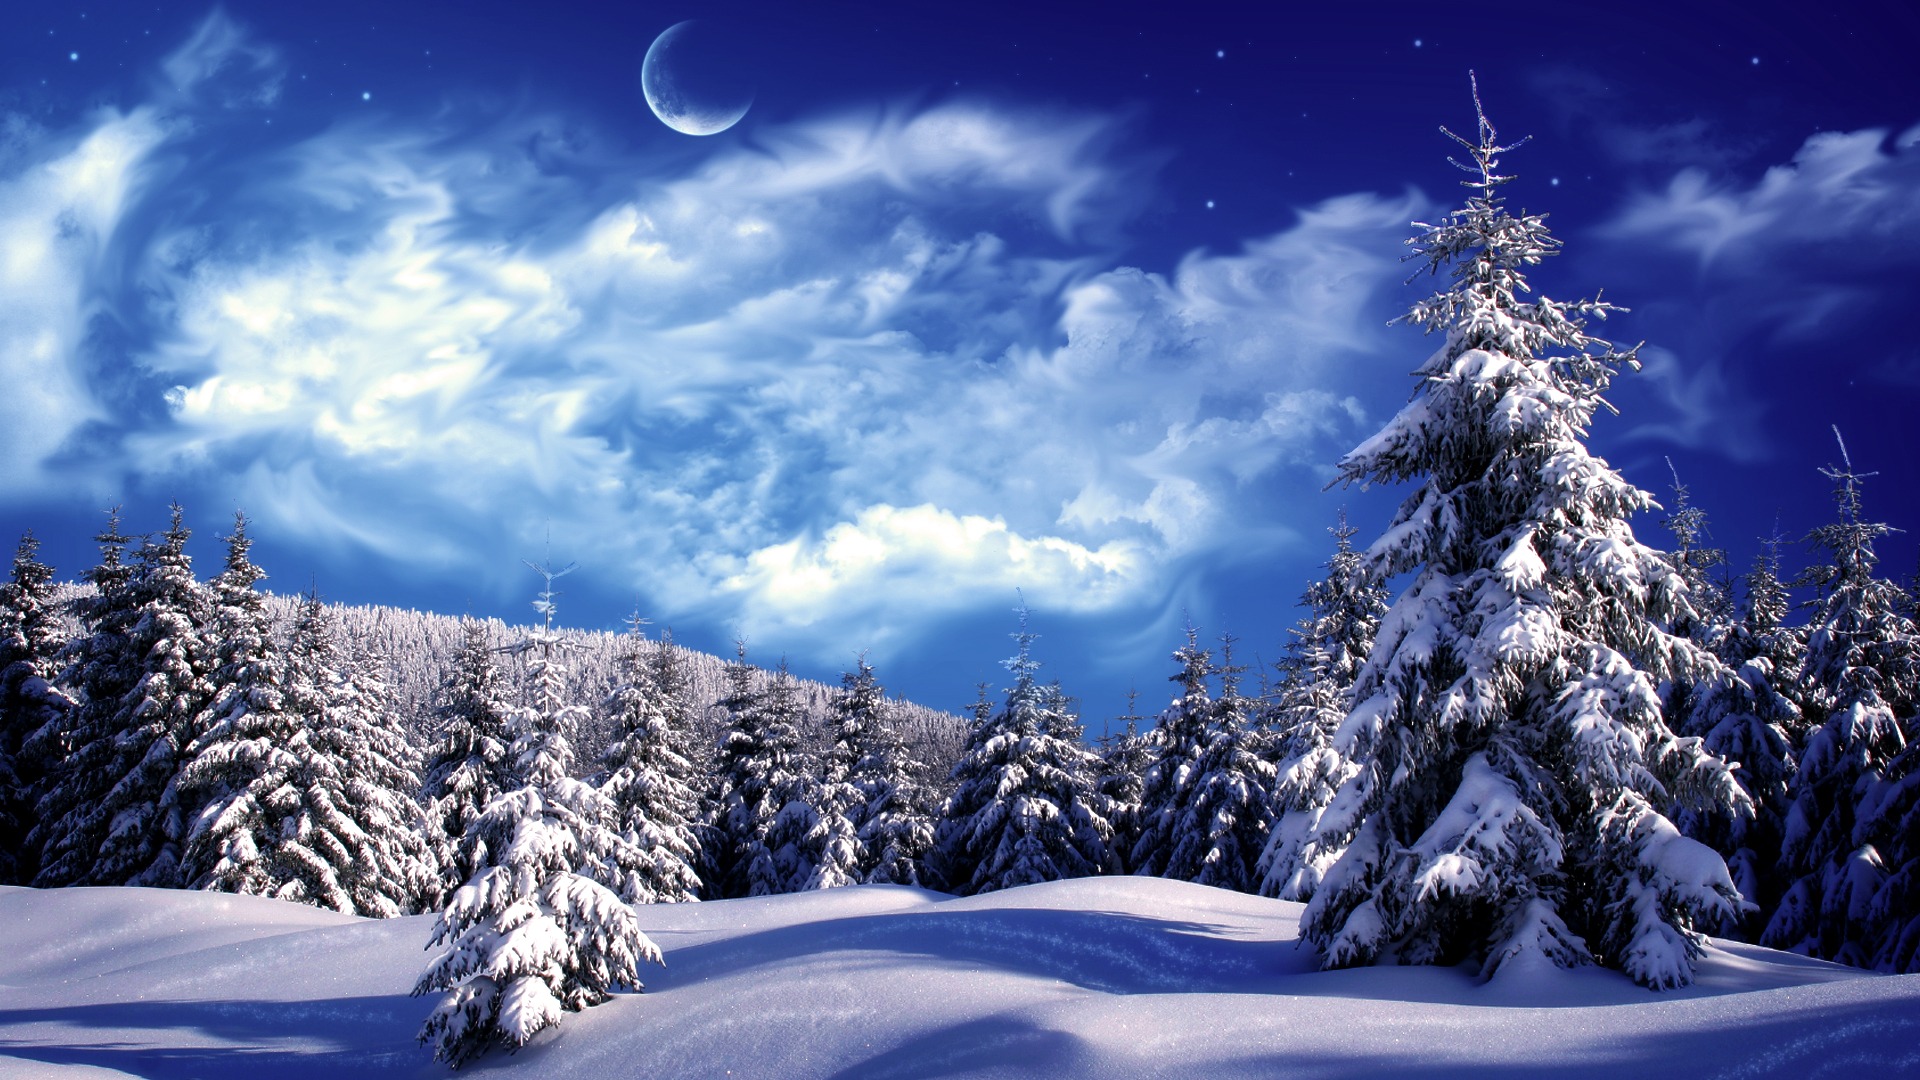 beautiful winter wallpaper 03382016 27